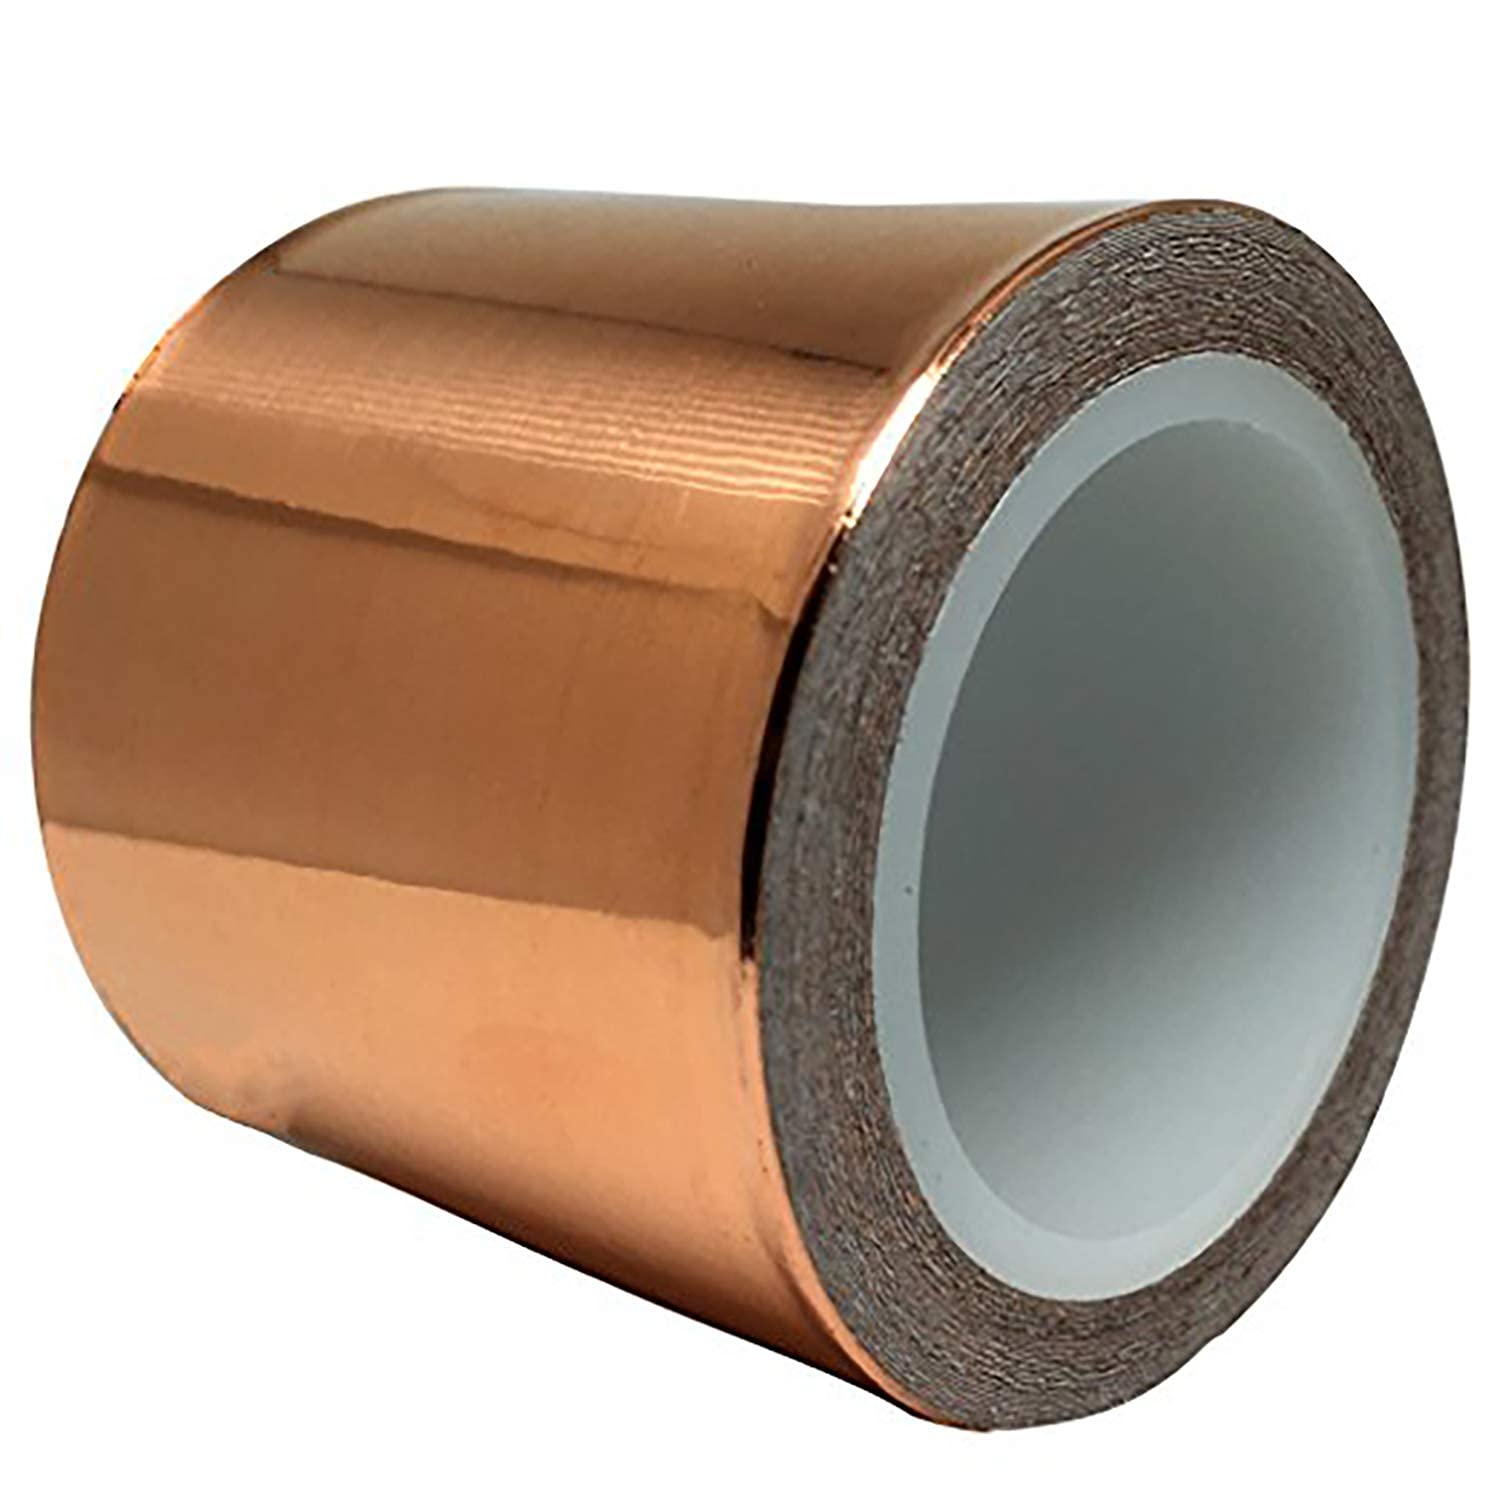 Kraftex Copper Tape 2 Inch x 33ft, Copper Foil Tape, Copper Tape with  Strong Conductive Adhesive, Conductive Tape, Copper Flashing, Shielding  Tape, Copper Slug Tape